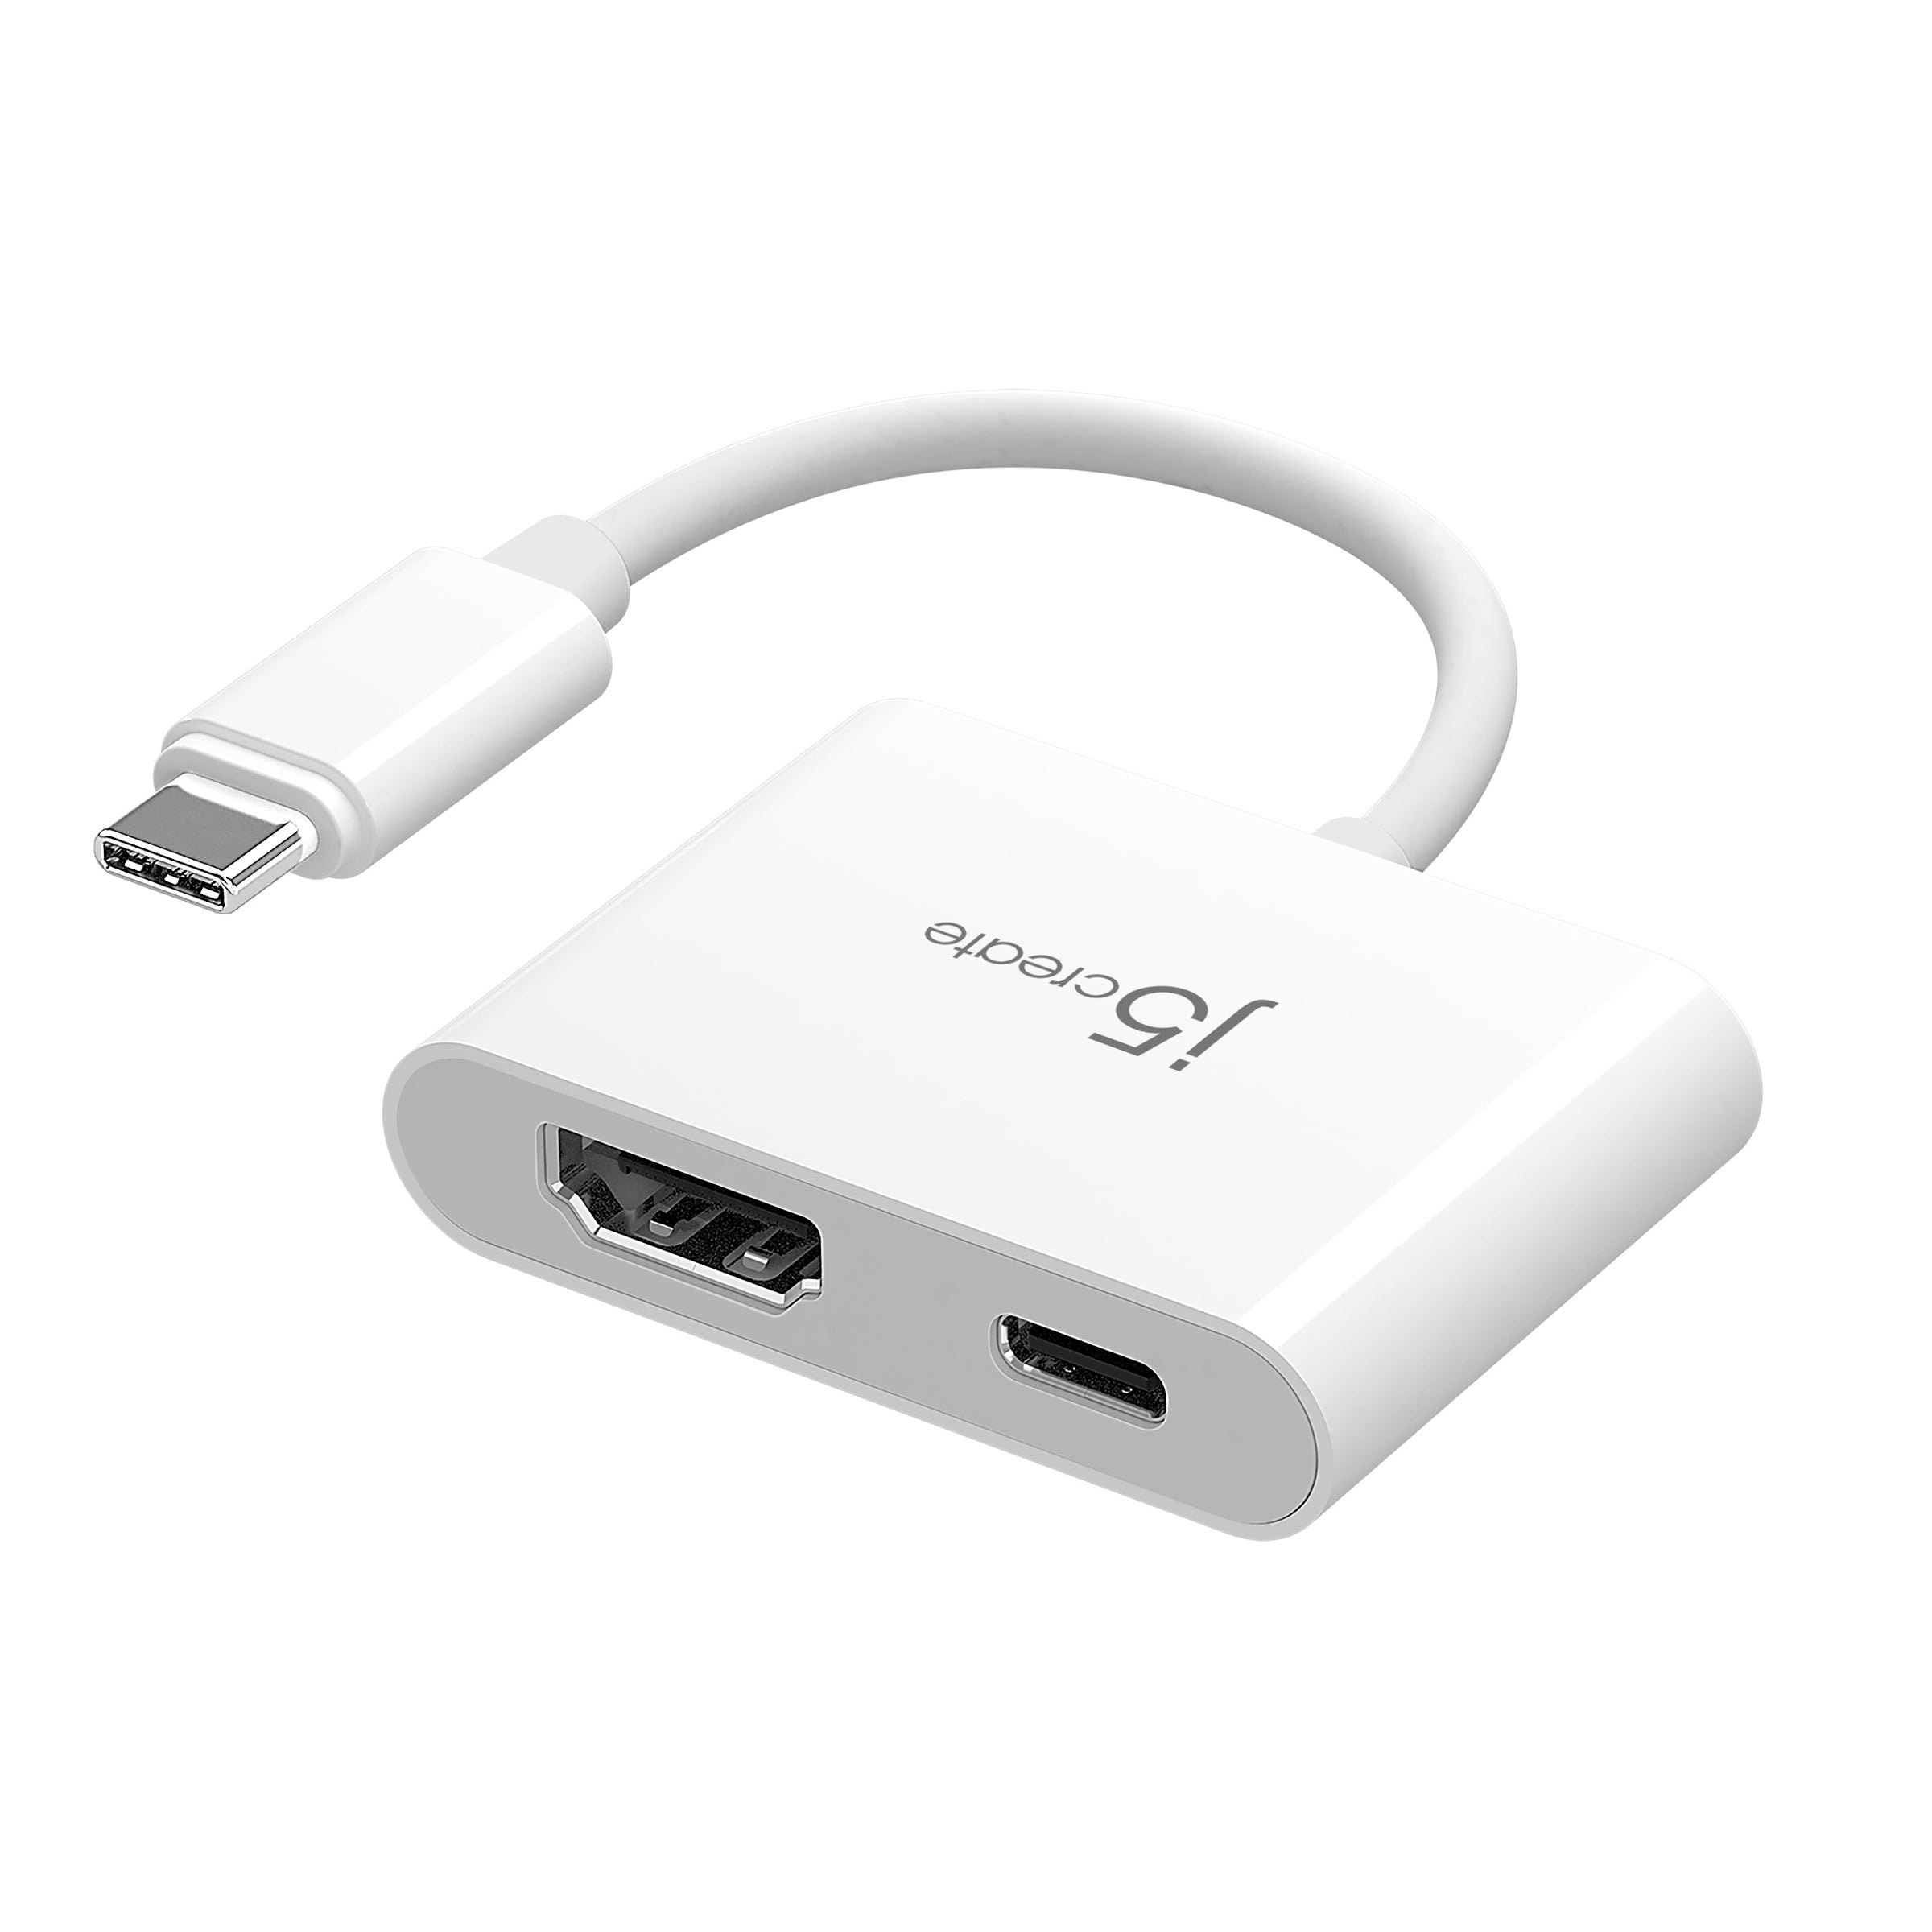 USB-C™ To HDMI®/VGA Travel Adapter